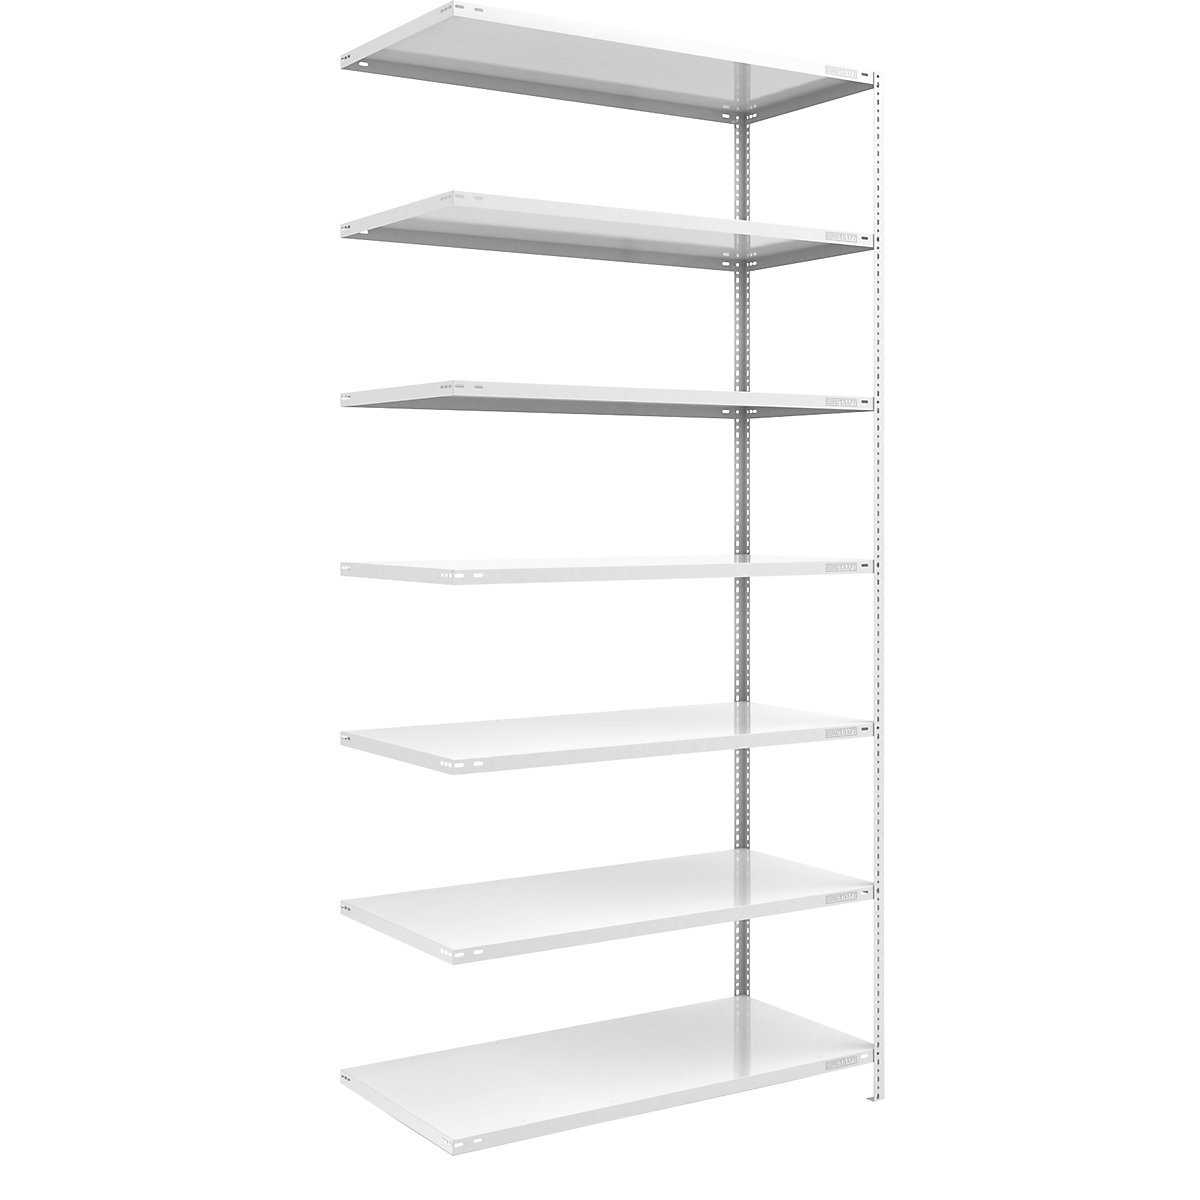 Bolt-together shelf unit, light duty, plastic coated – eurokraft pro, shelf unit height 3000 mm, shelf width 1300 mm, depth 800 mm, extension shelf unit-10